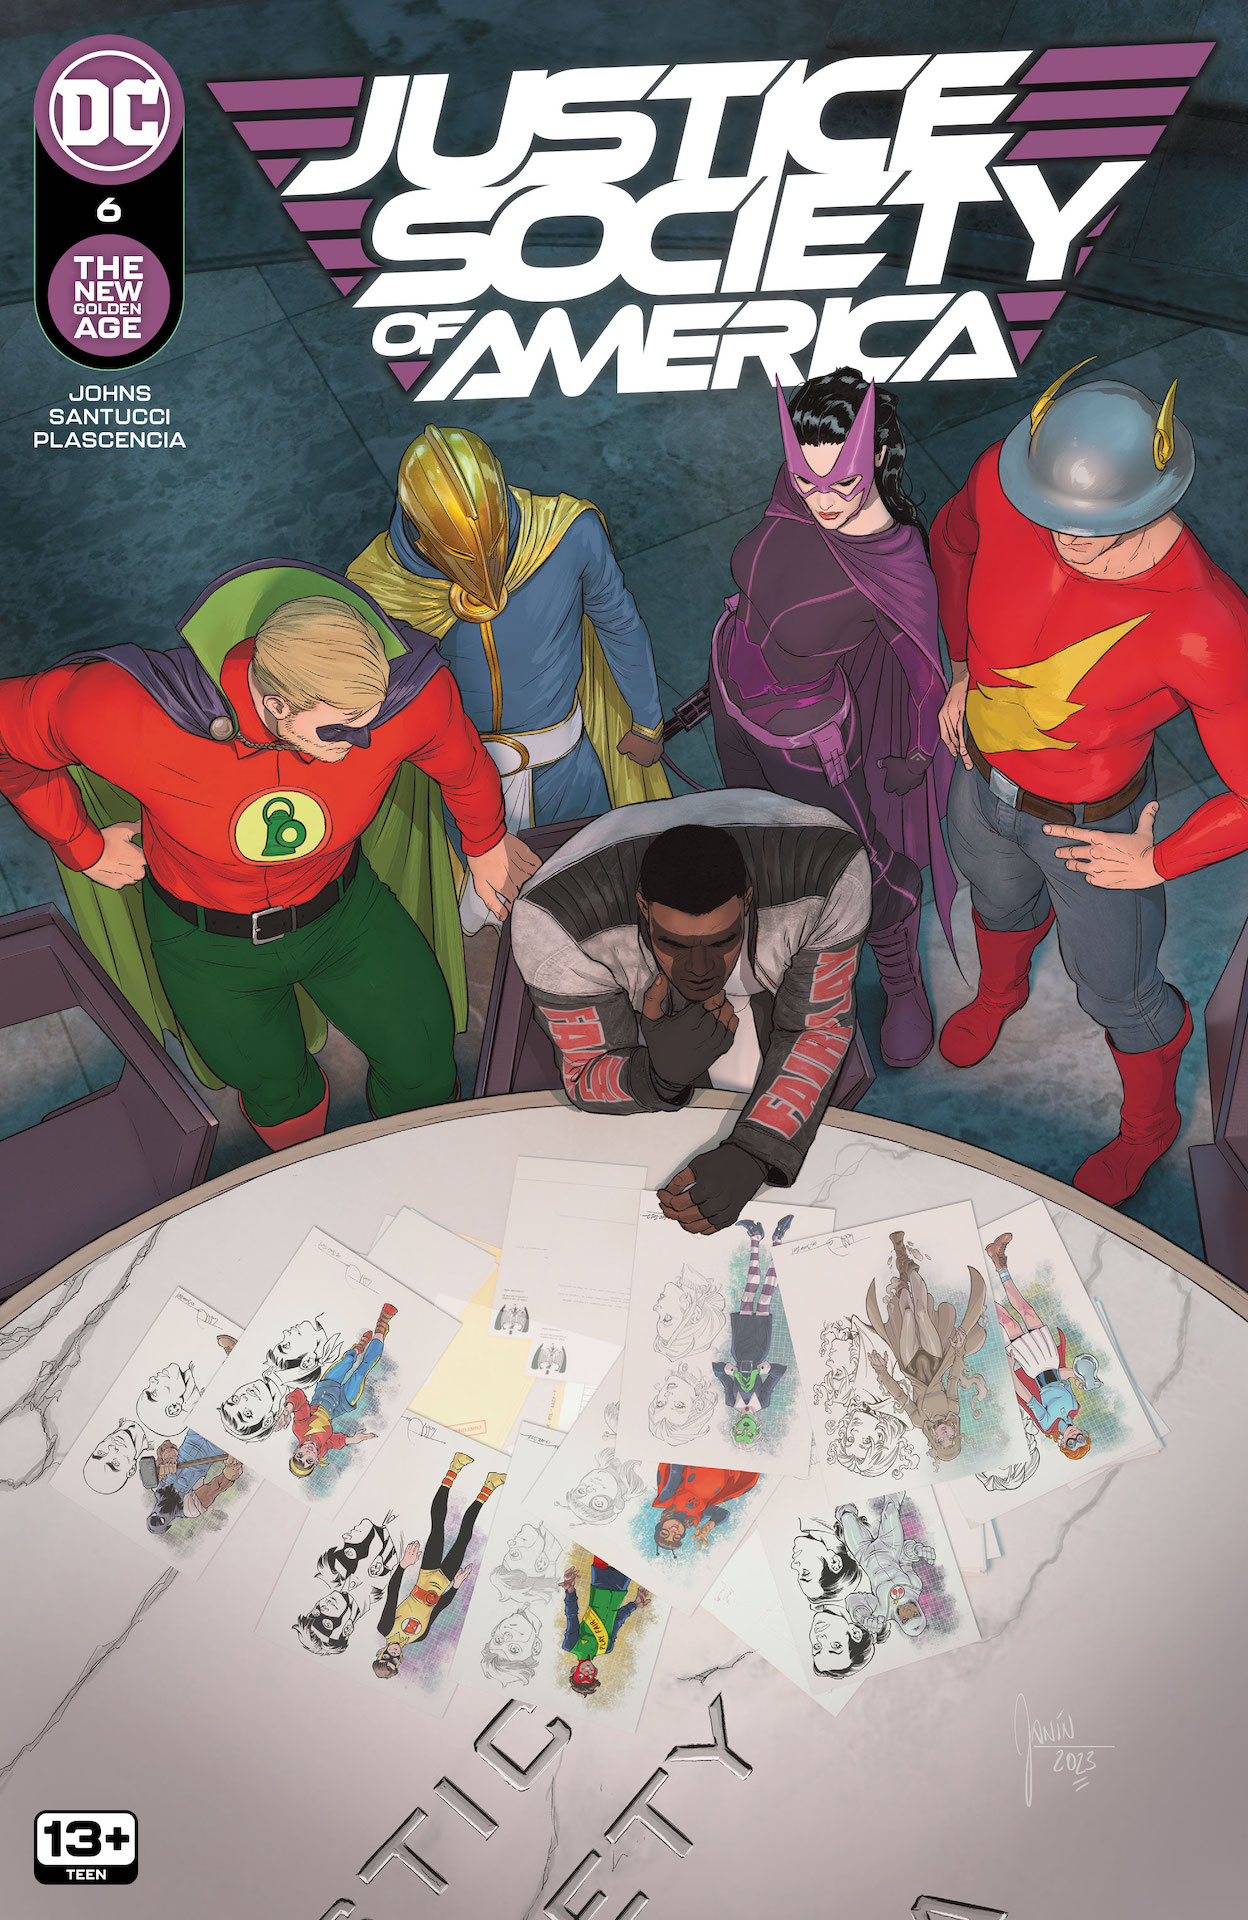 DC Previe: Justice Society of America #6